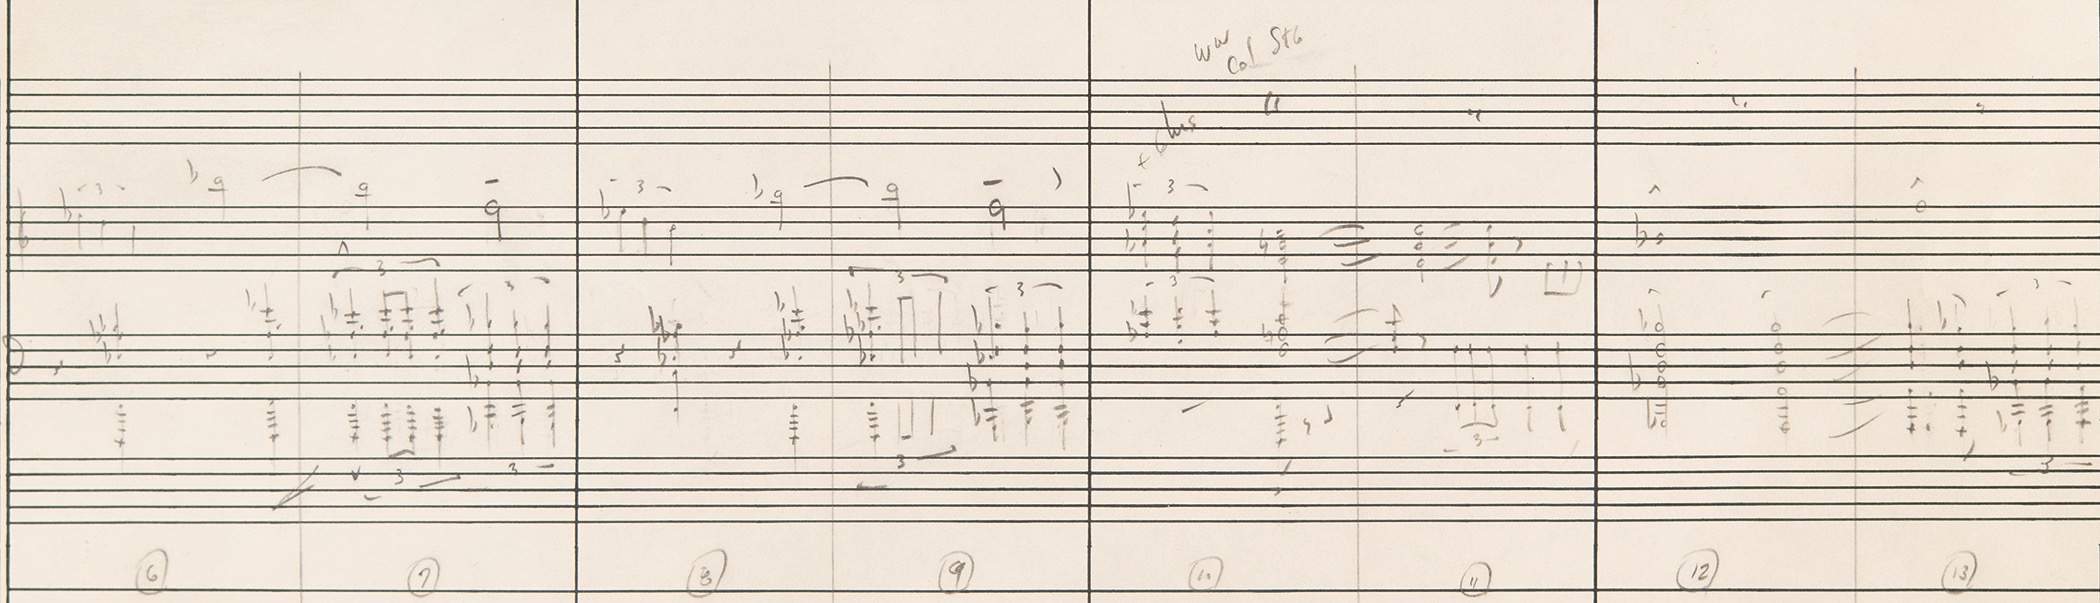 Lot #4046 Star Wars: John Williams Original Handwritten Music Manuscript for the Opening 'Star Wars Main Title' Theme - Image 7